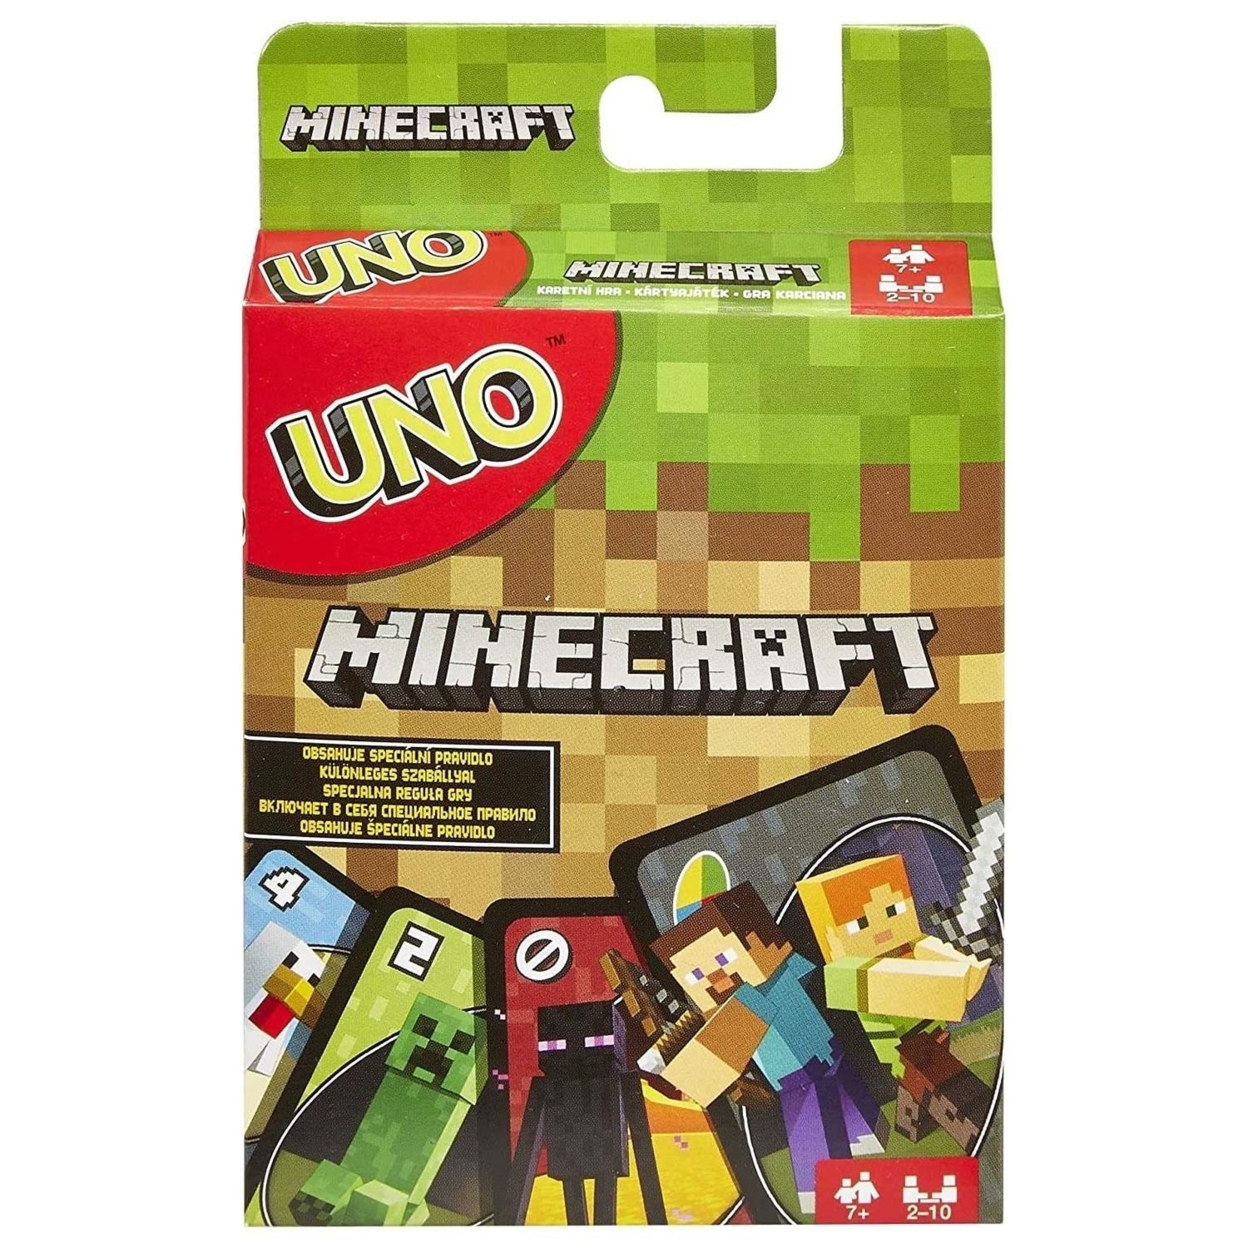 UNO Minecraft Edition Video Game Graphics Card Game Mattel